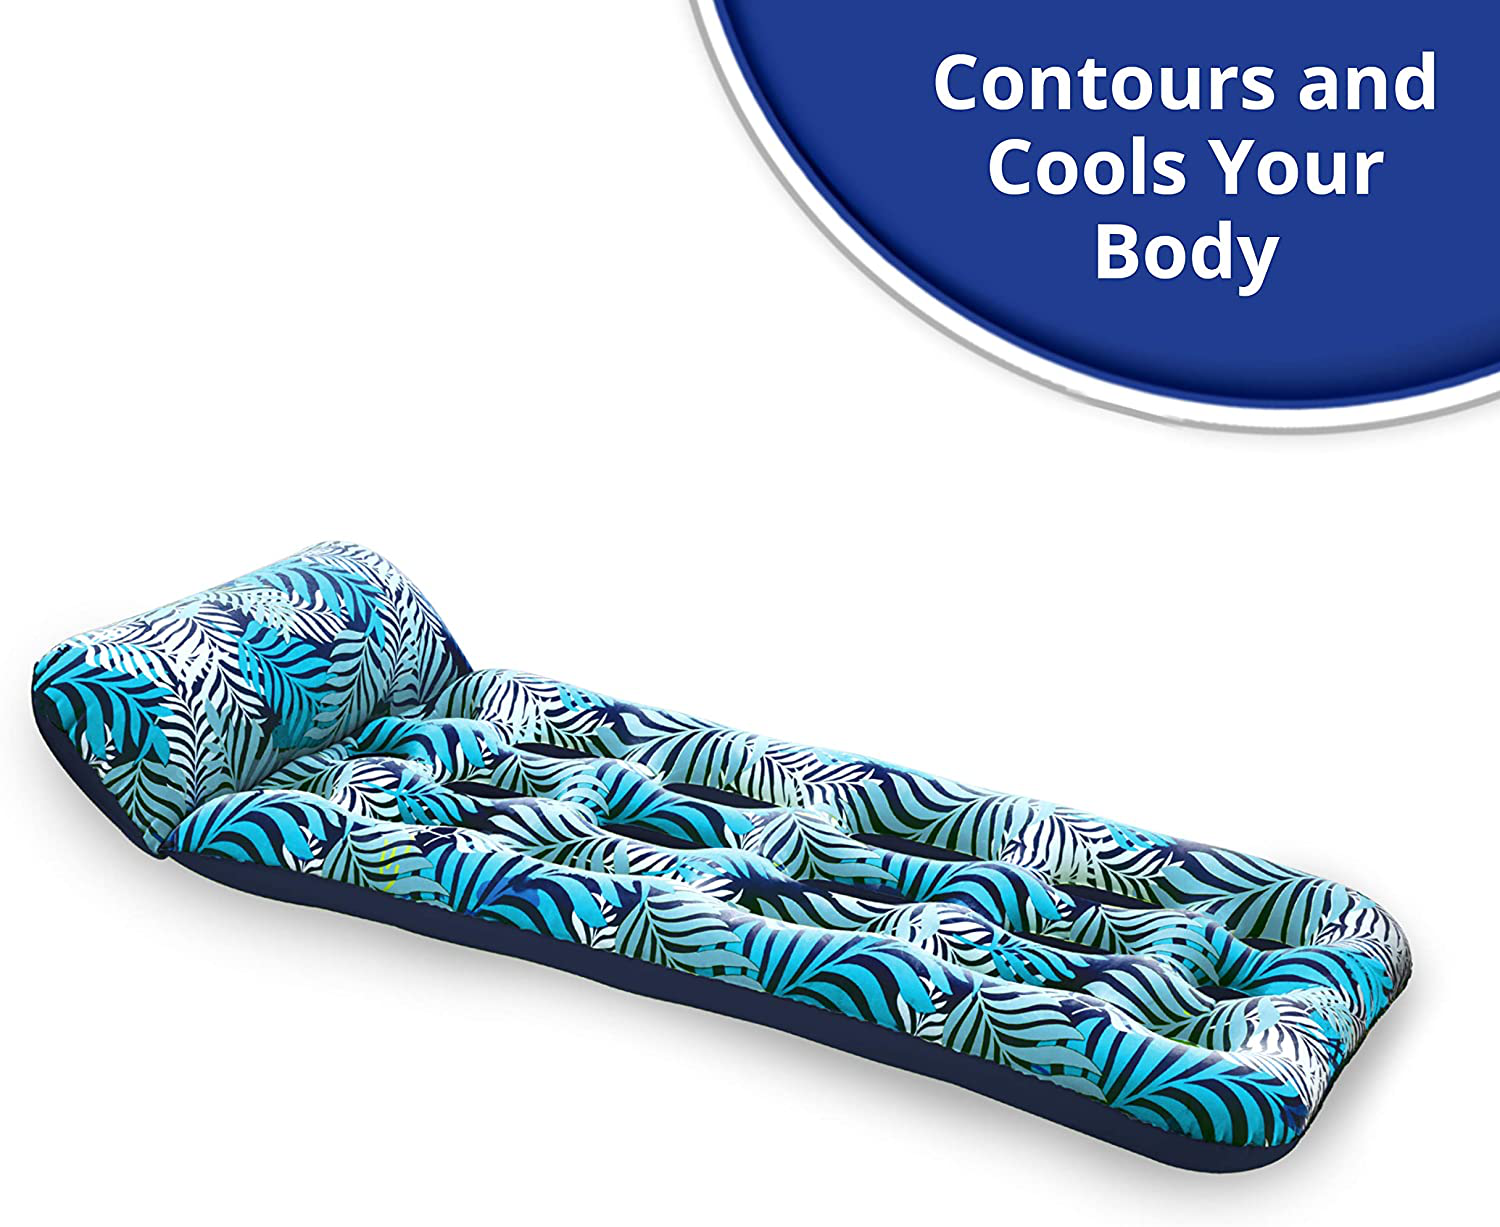 Aqua LEISURE Oversize Supreme Fabric Covered 18-Pocket Inflatable Contour Lounge Luxury Fabric Suntanner Pool Float Heavy Duty Blue Ferns